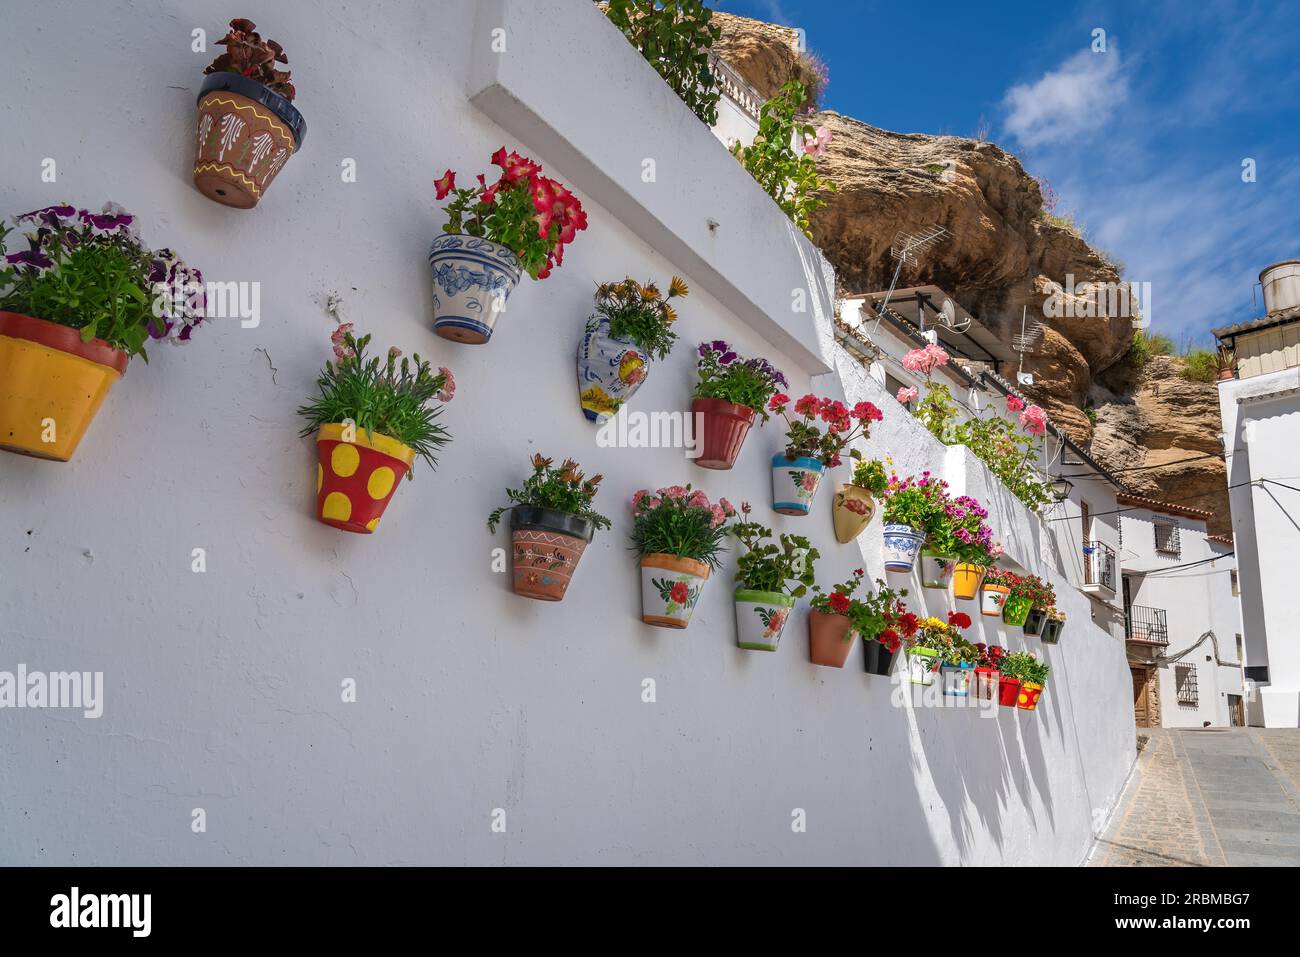 Colorful flower pots and rock overhangs - Setenil de las Bodegas, Andalusia, Spain Stock Photo